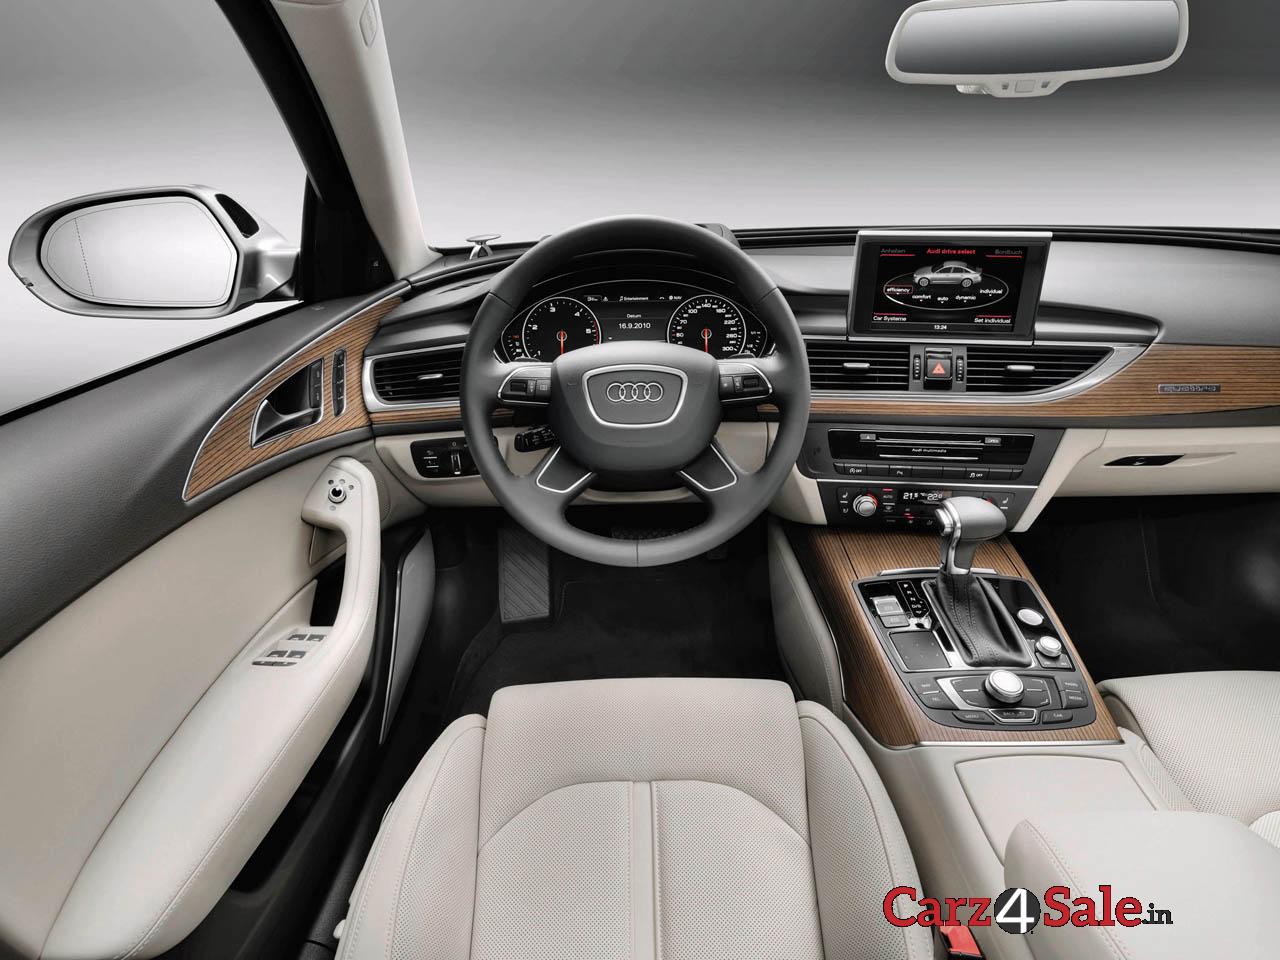 Audi A6 Tfsi Interior